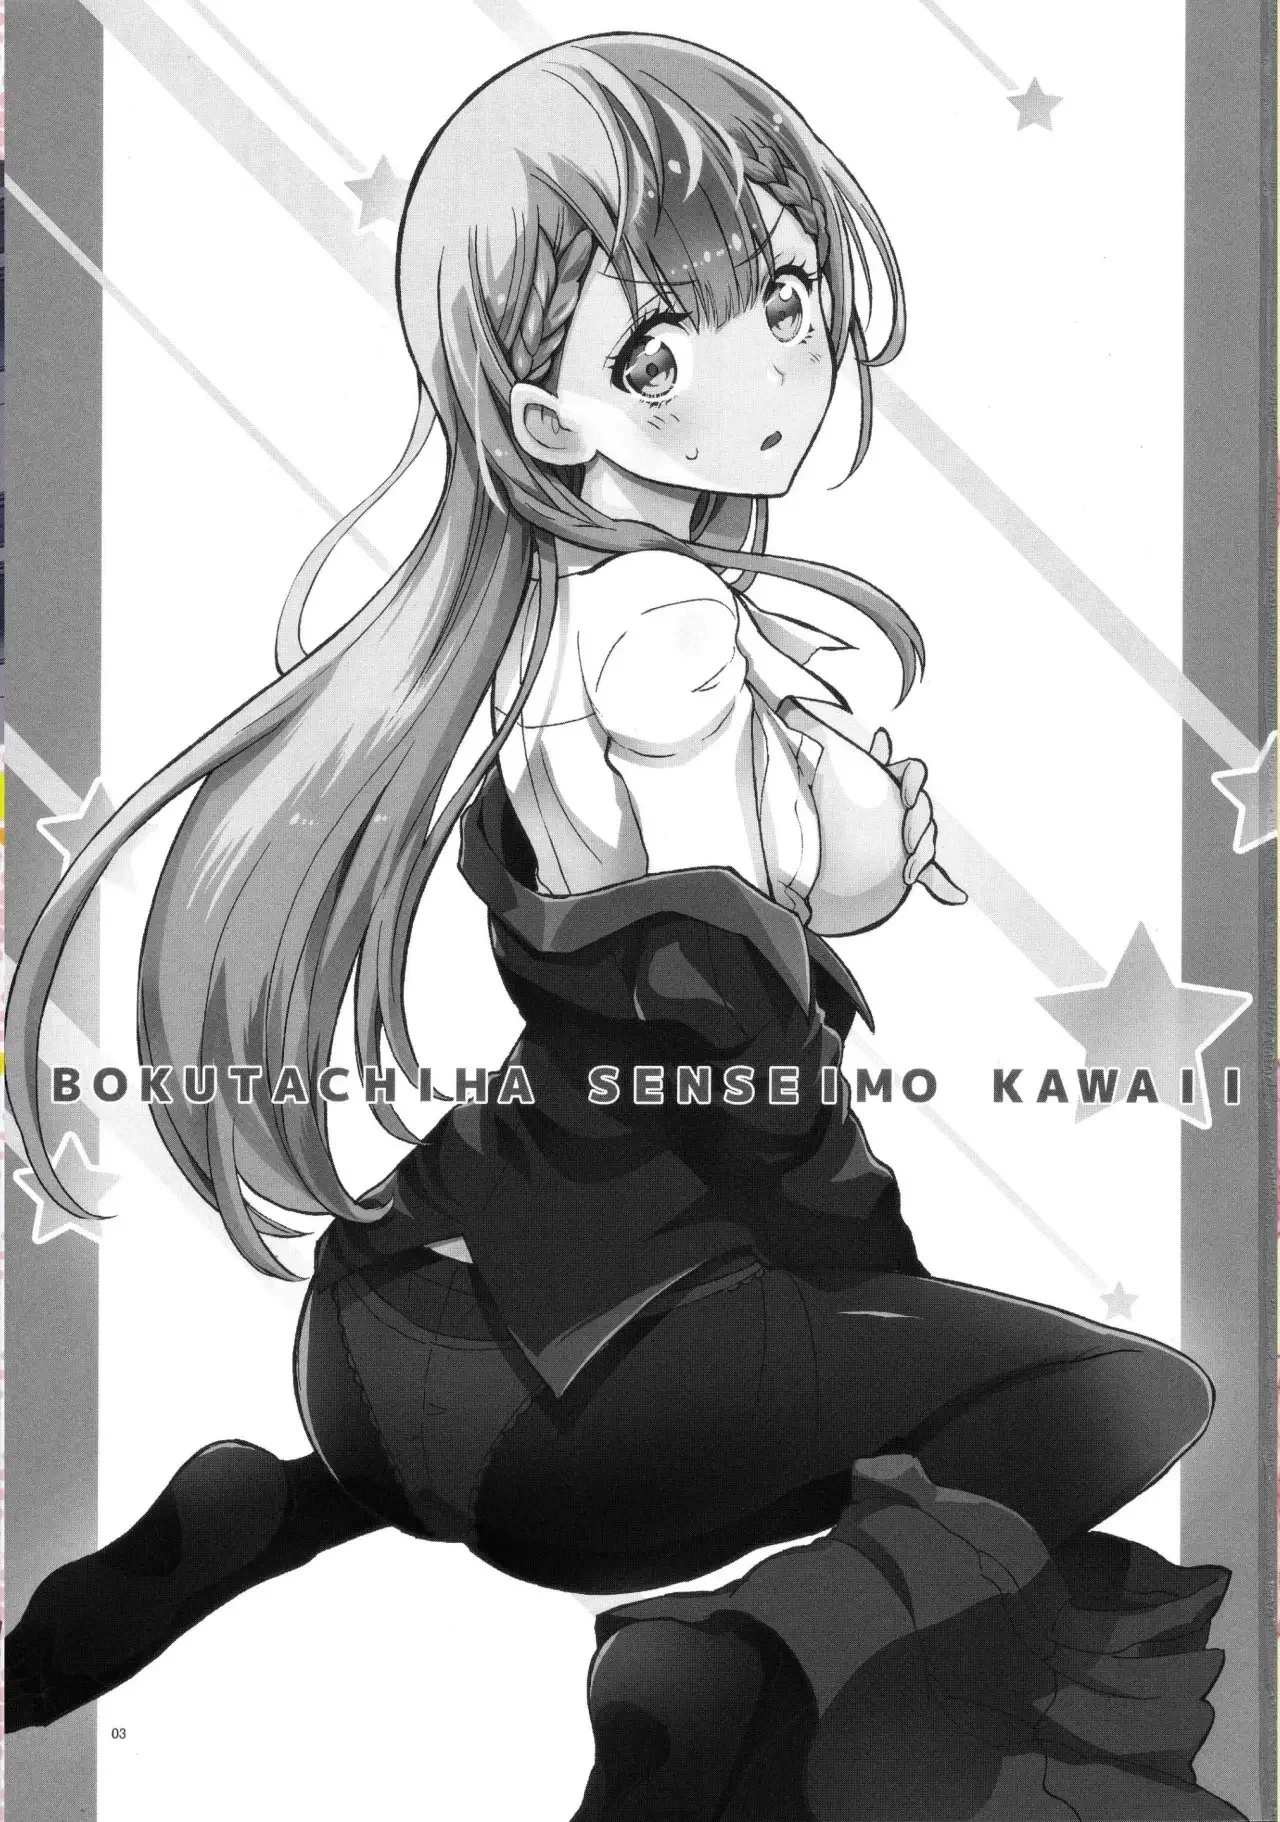 Bokutachi ha Sensei mo Kawaii - 2